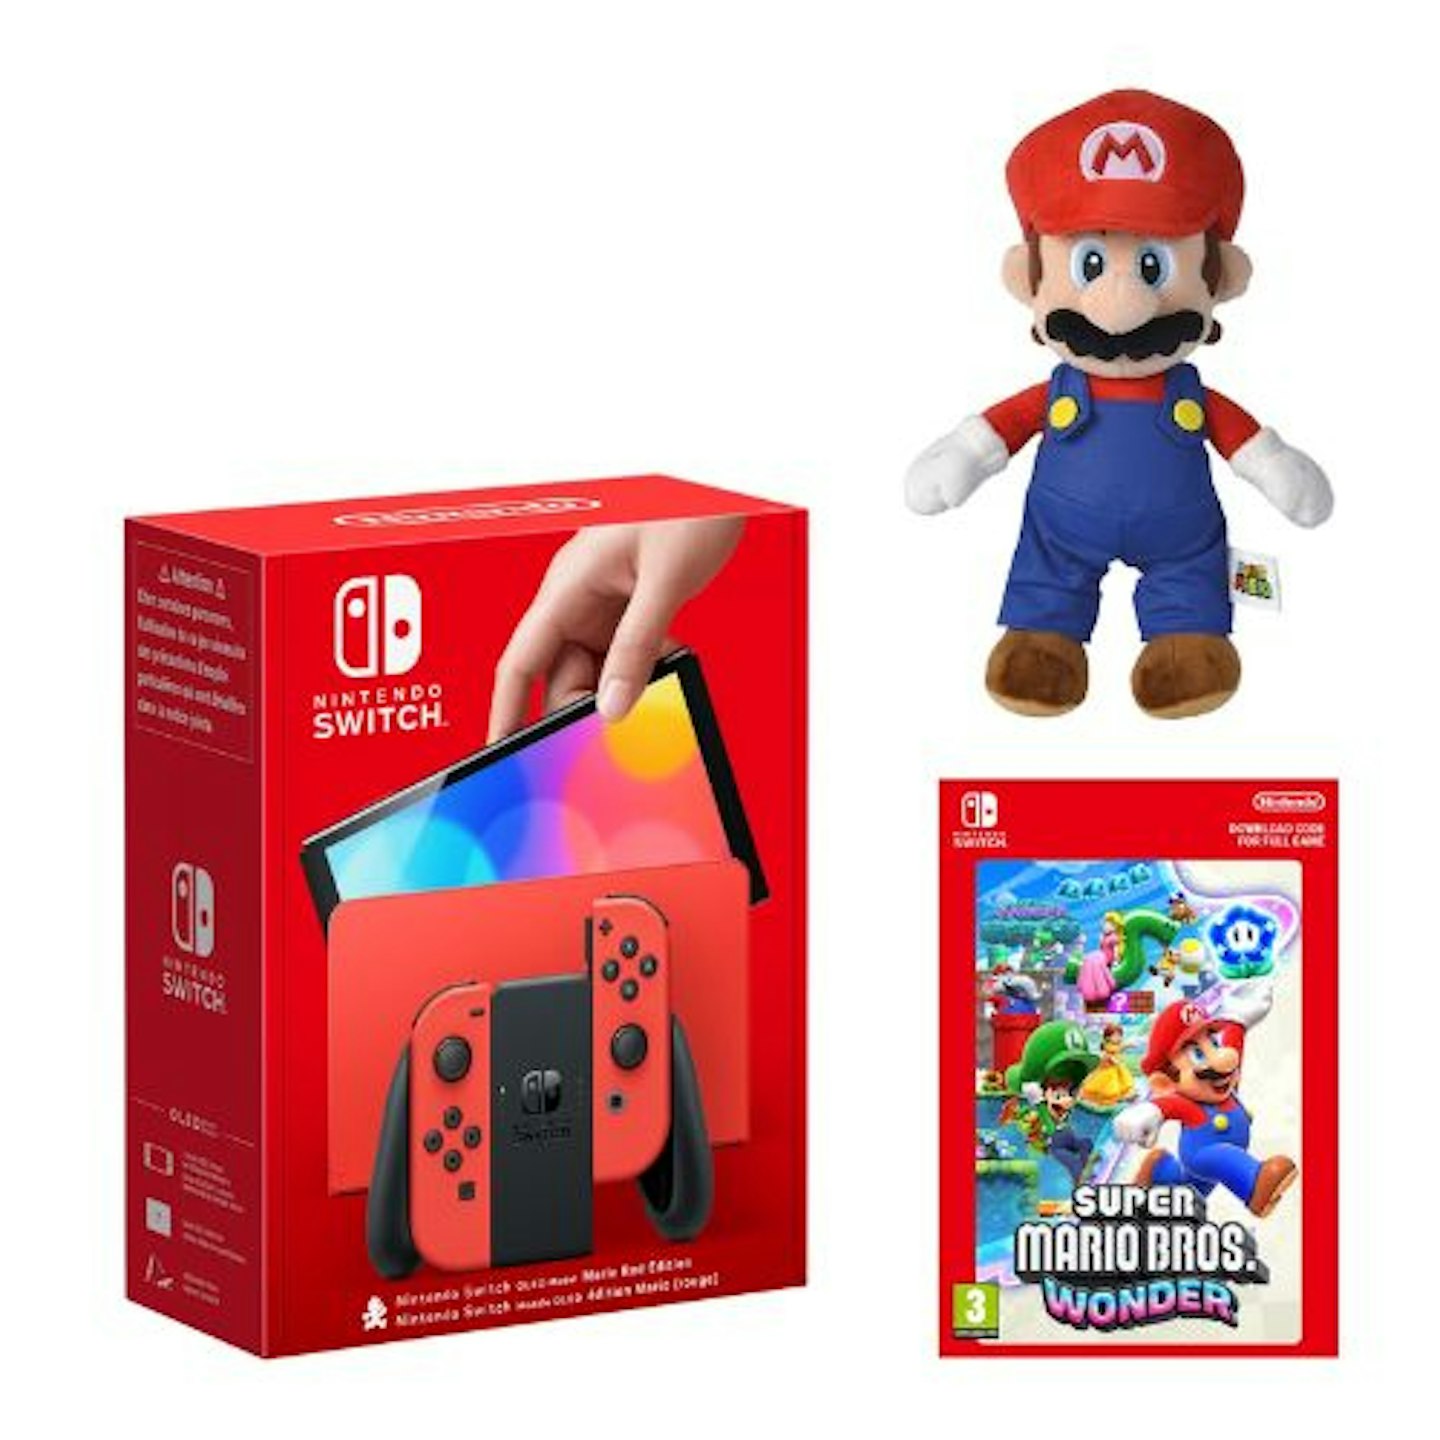 Bundle Nintendo Switch Oled Mario + Super Mario Bros Wonder